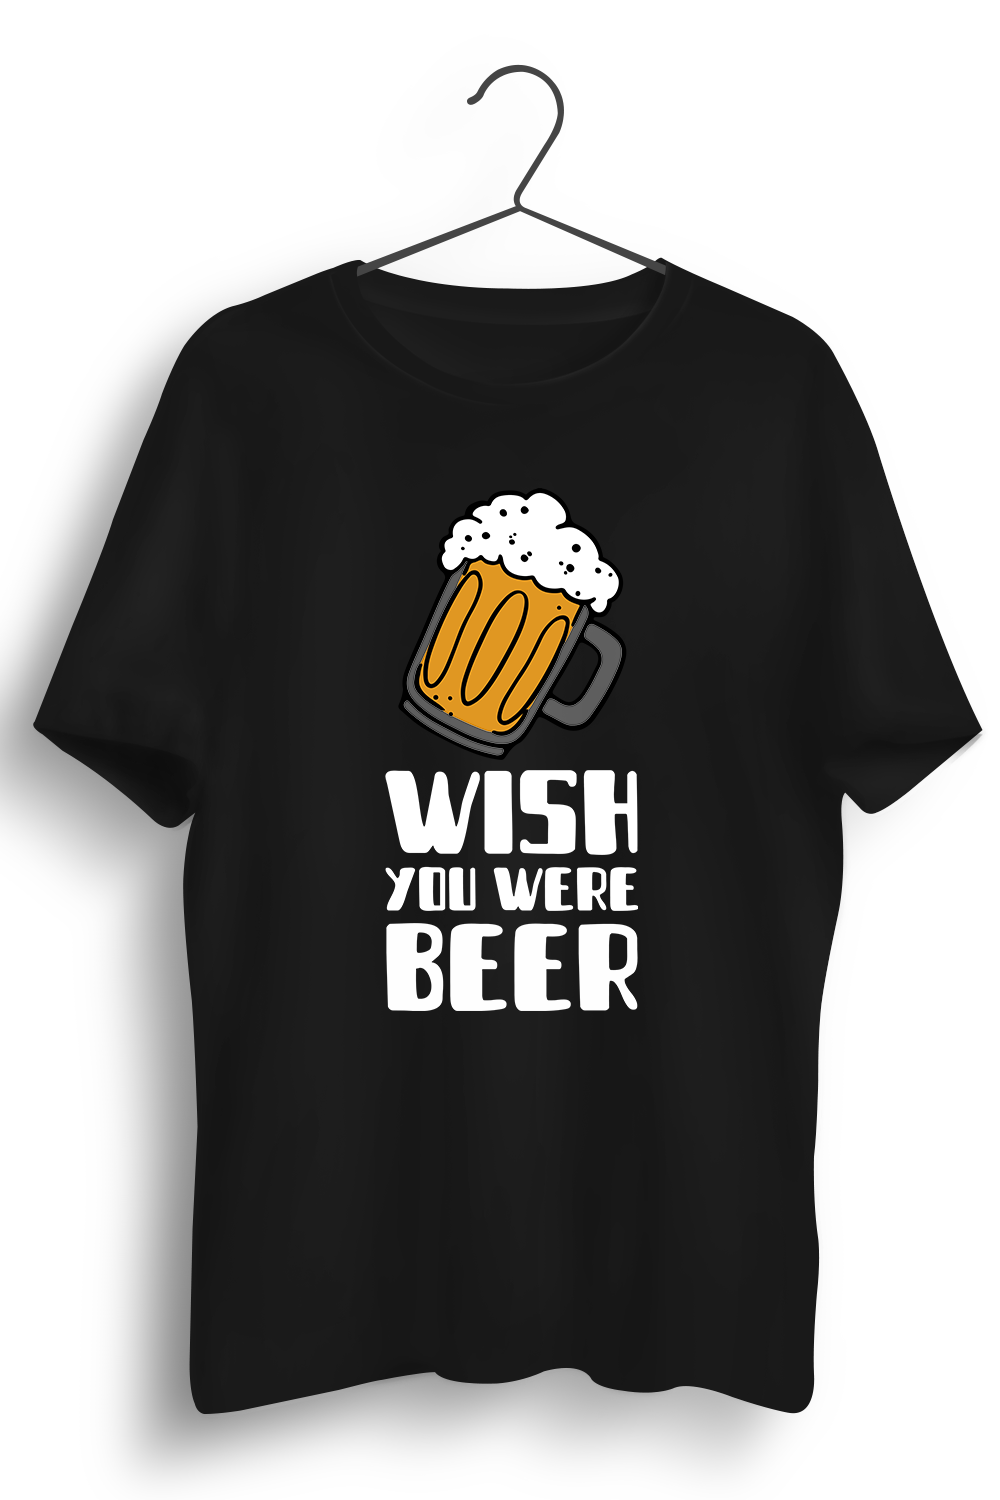 Wish You Were Beer Graphic Printed Black Tshirt